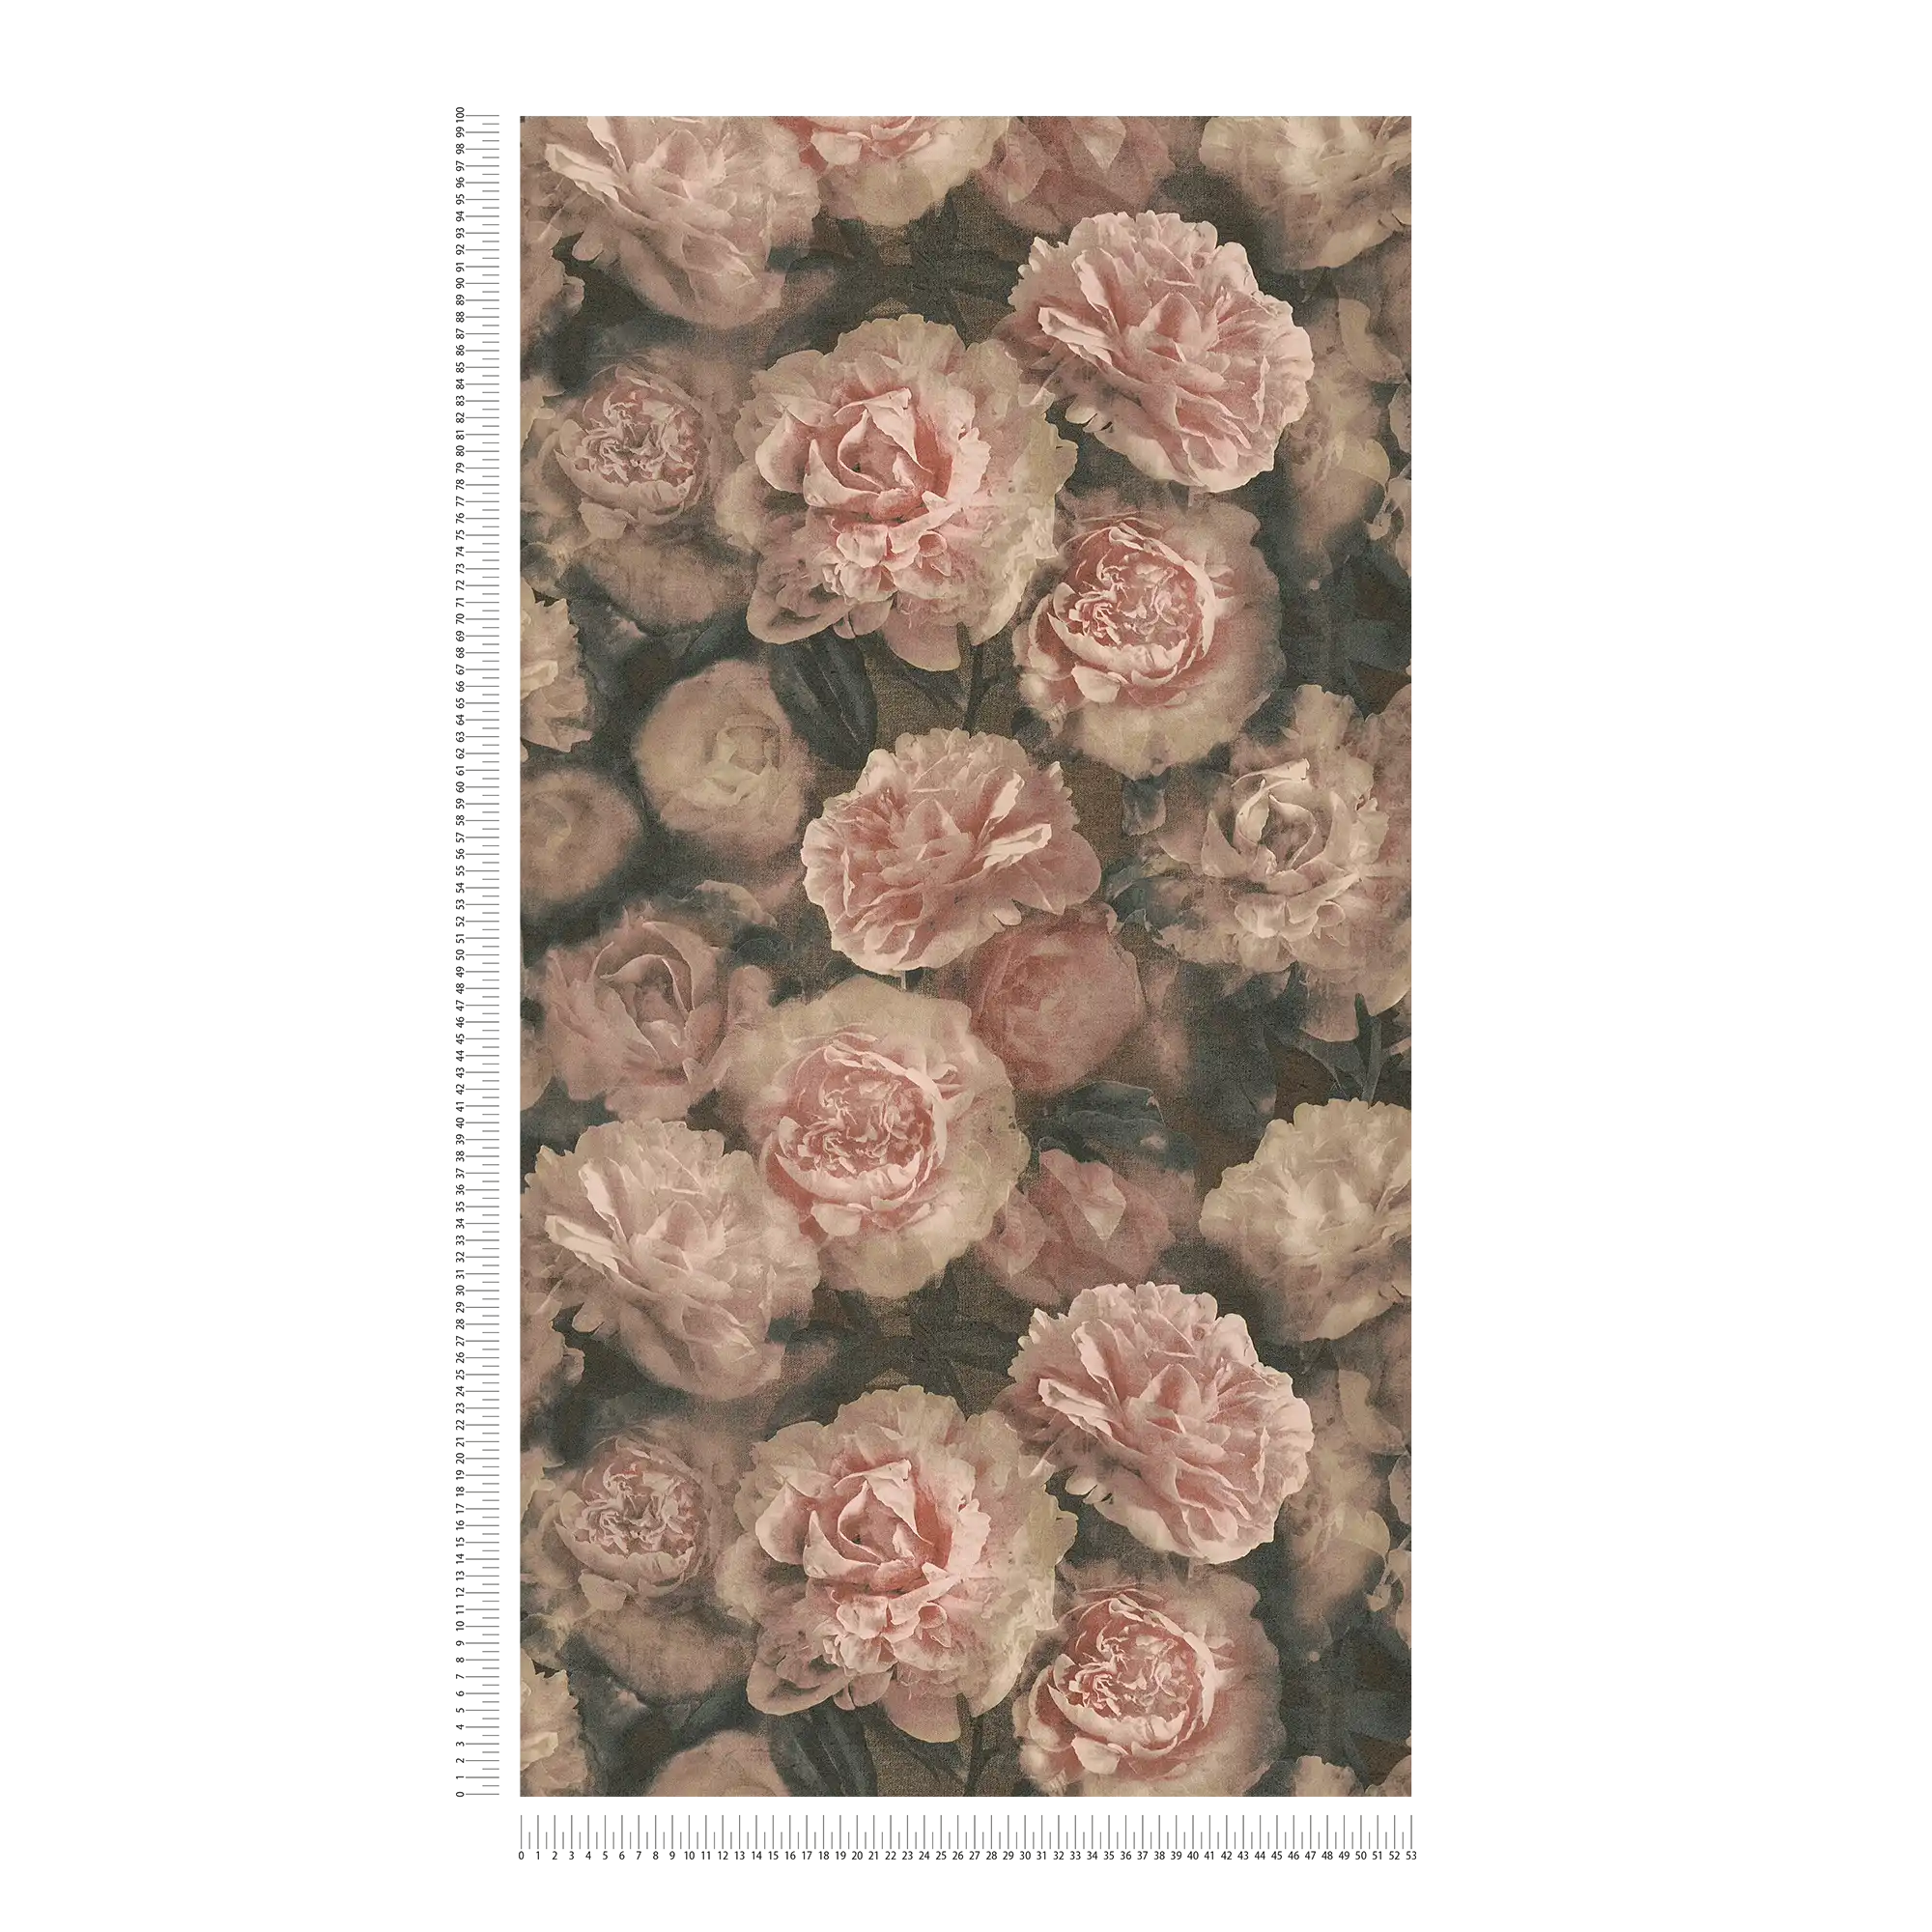             Vintage look floral wallpaper roses - pink, red, black
        